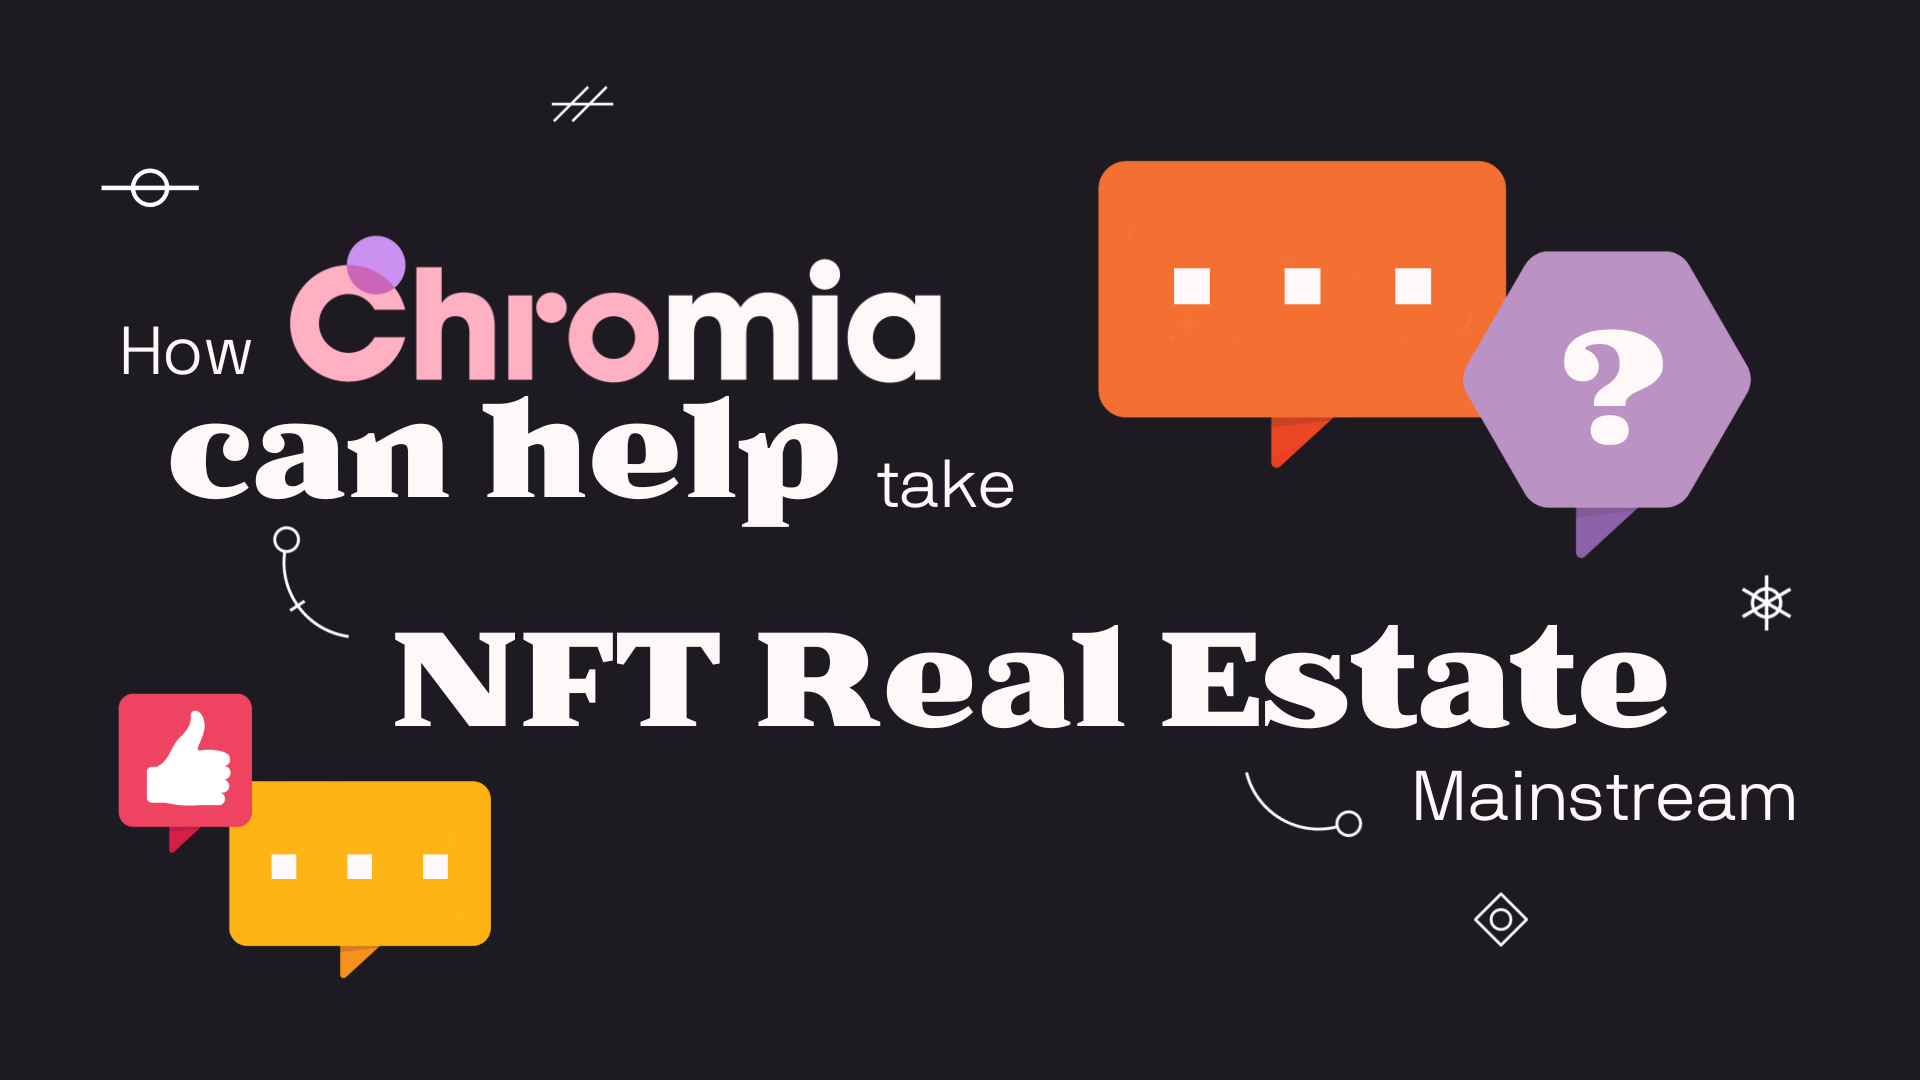 How Chromia can help take NFT Real Estate Mainstream